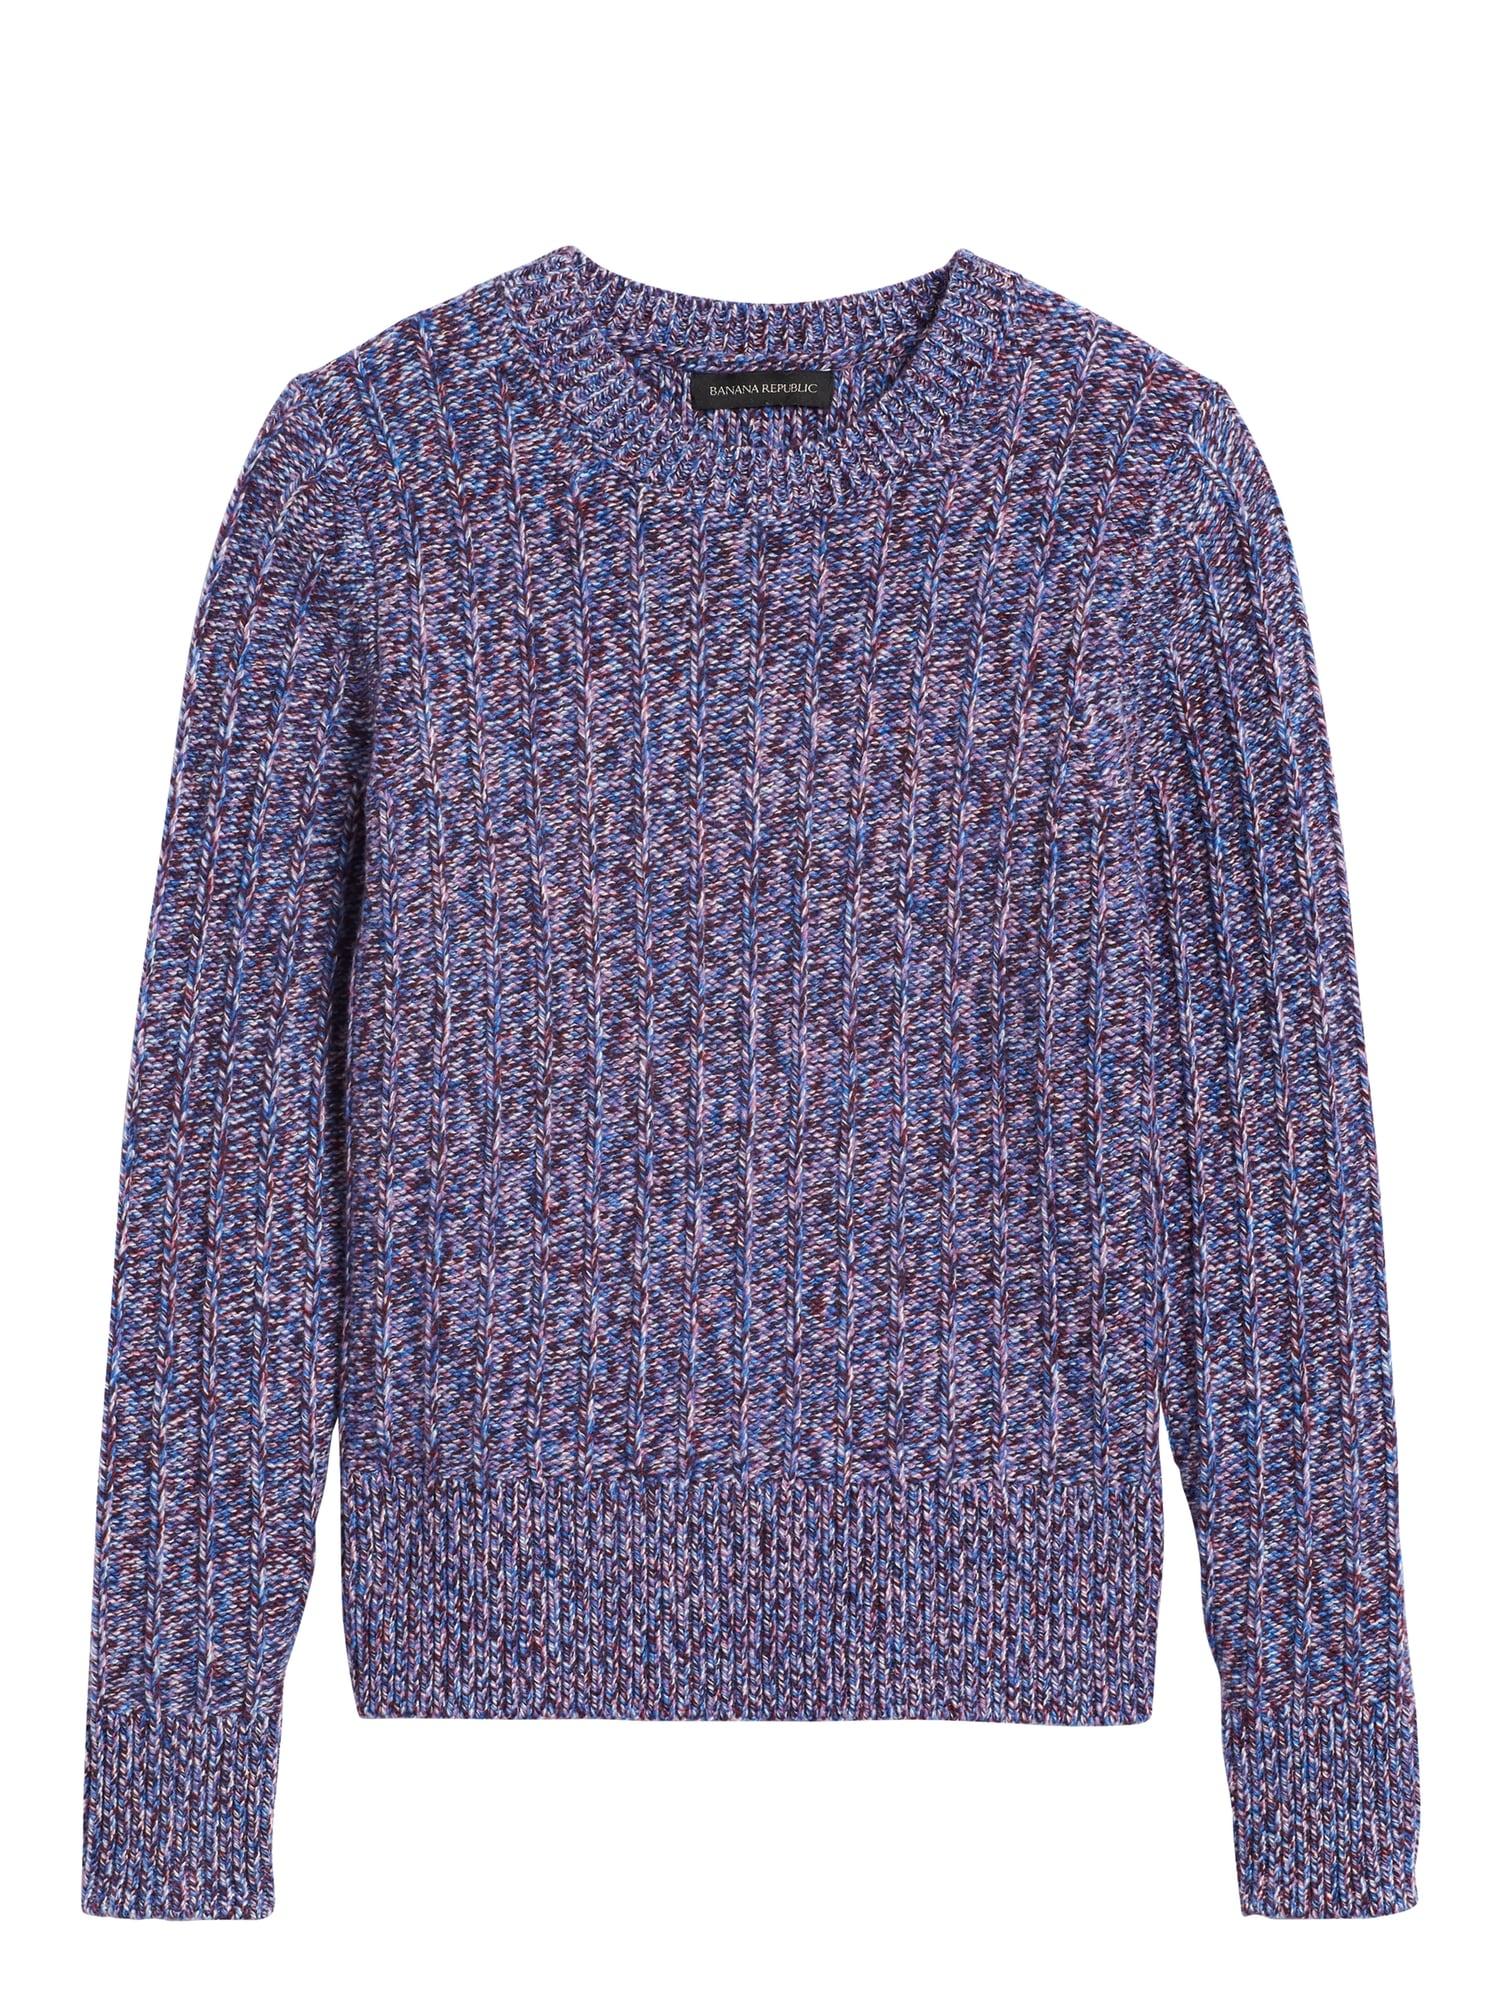 Banana Republic Marled Wool-blend Sweater in Purple - Lyst